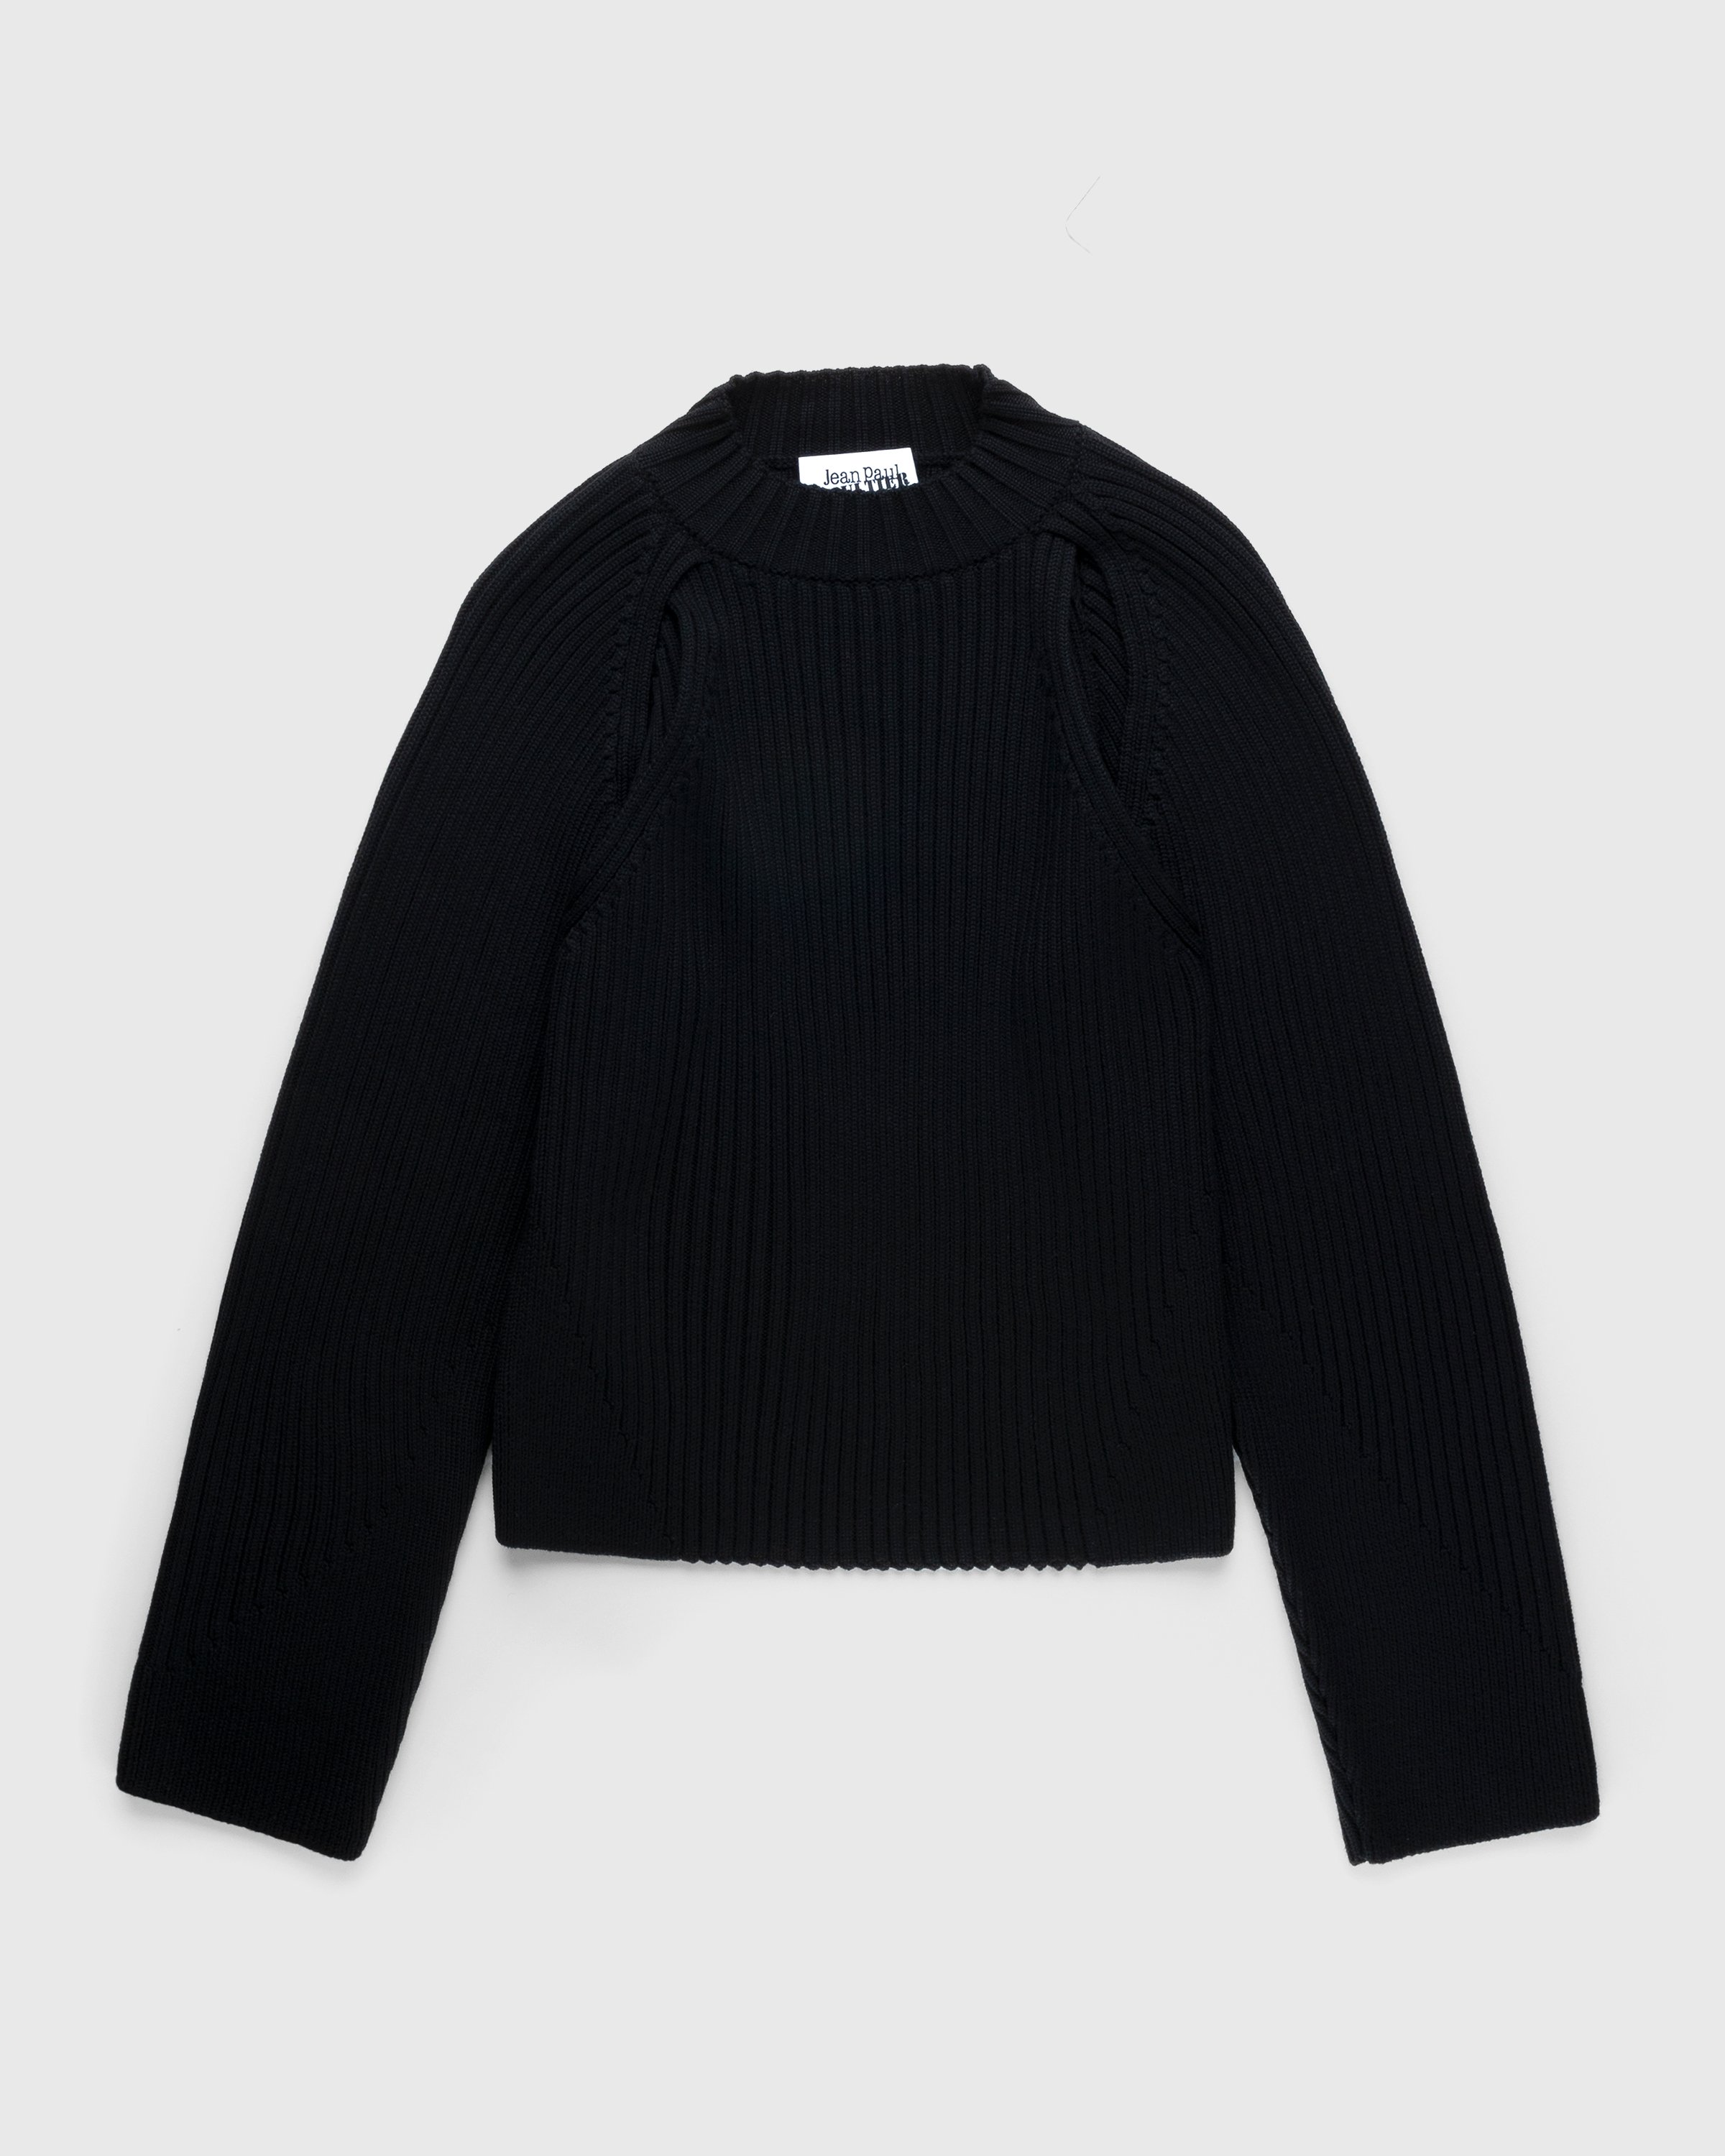 Jean Paul Gaultier - Oversized Sweater - Clothing - Black - Image 1